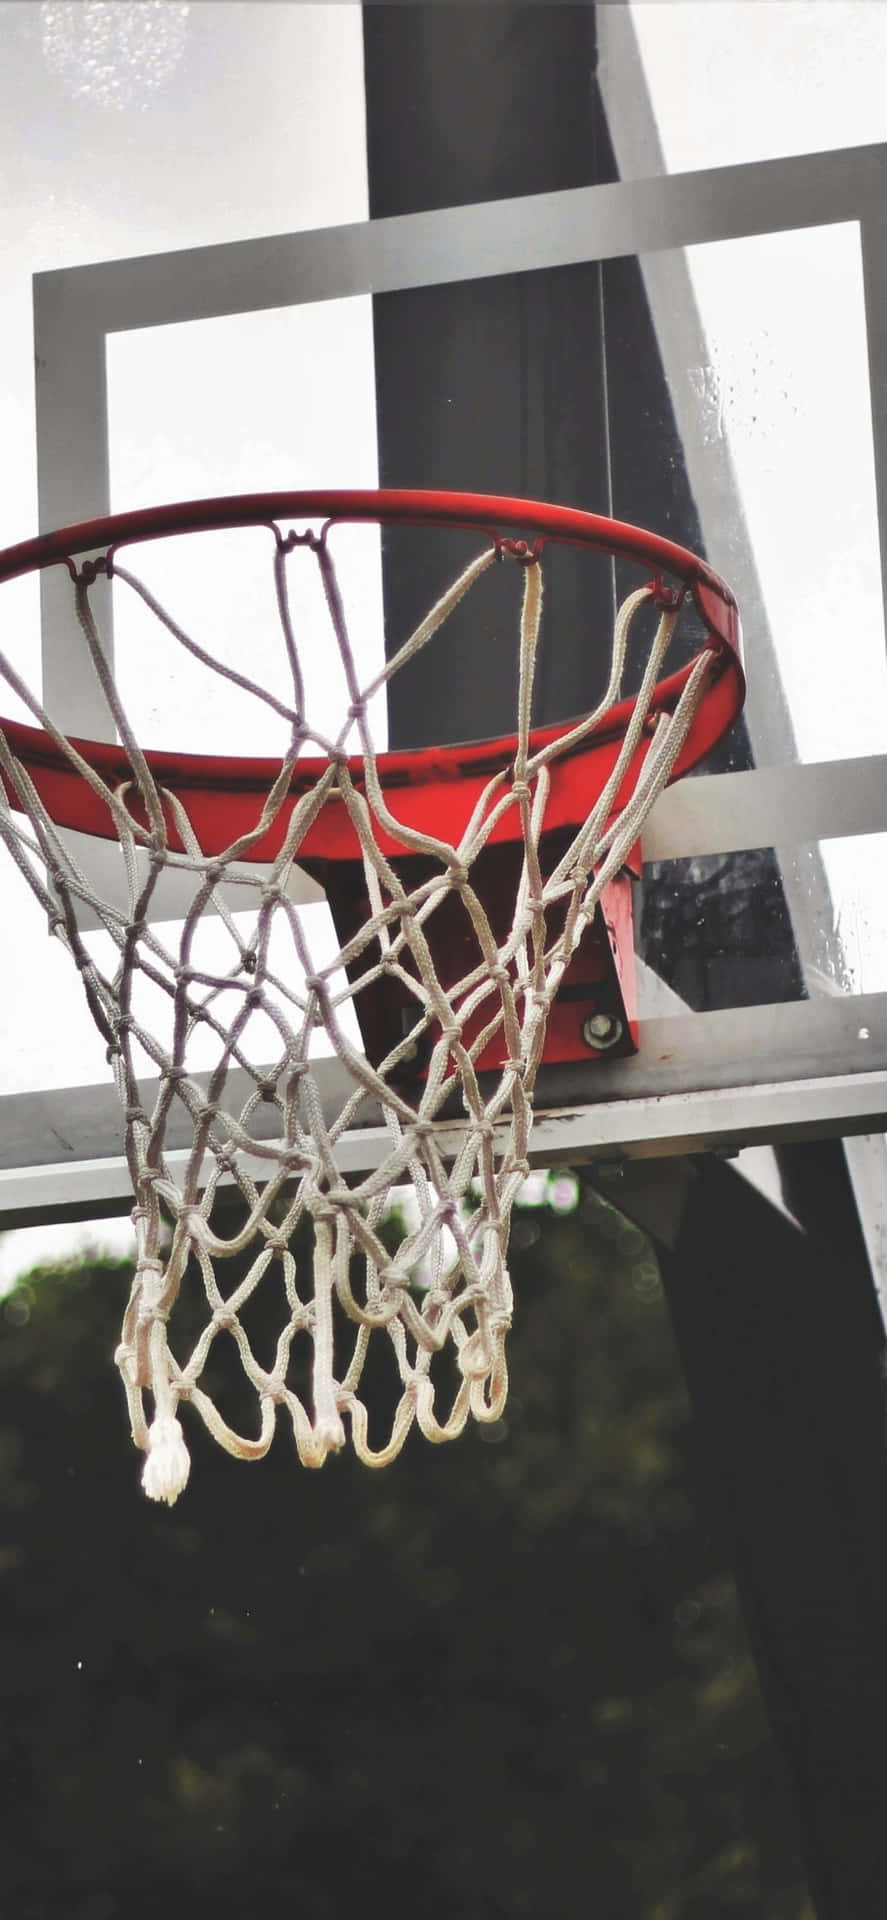 Iphone Xs Basketball Hoop Background